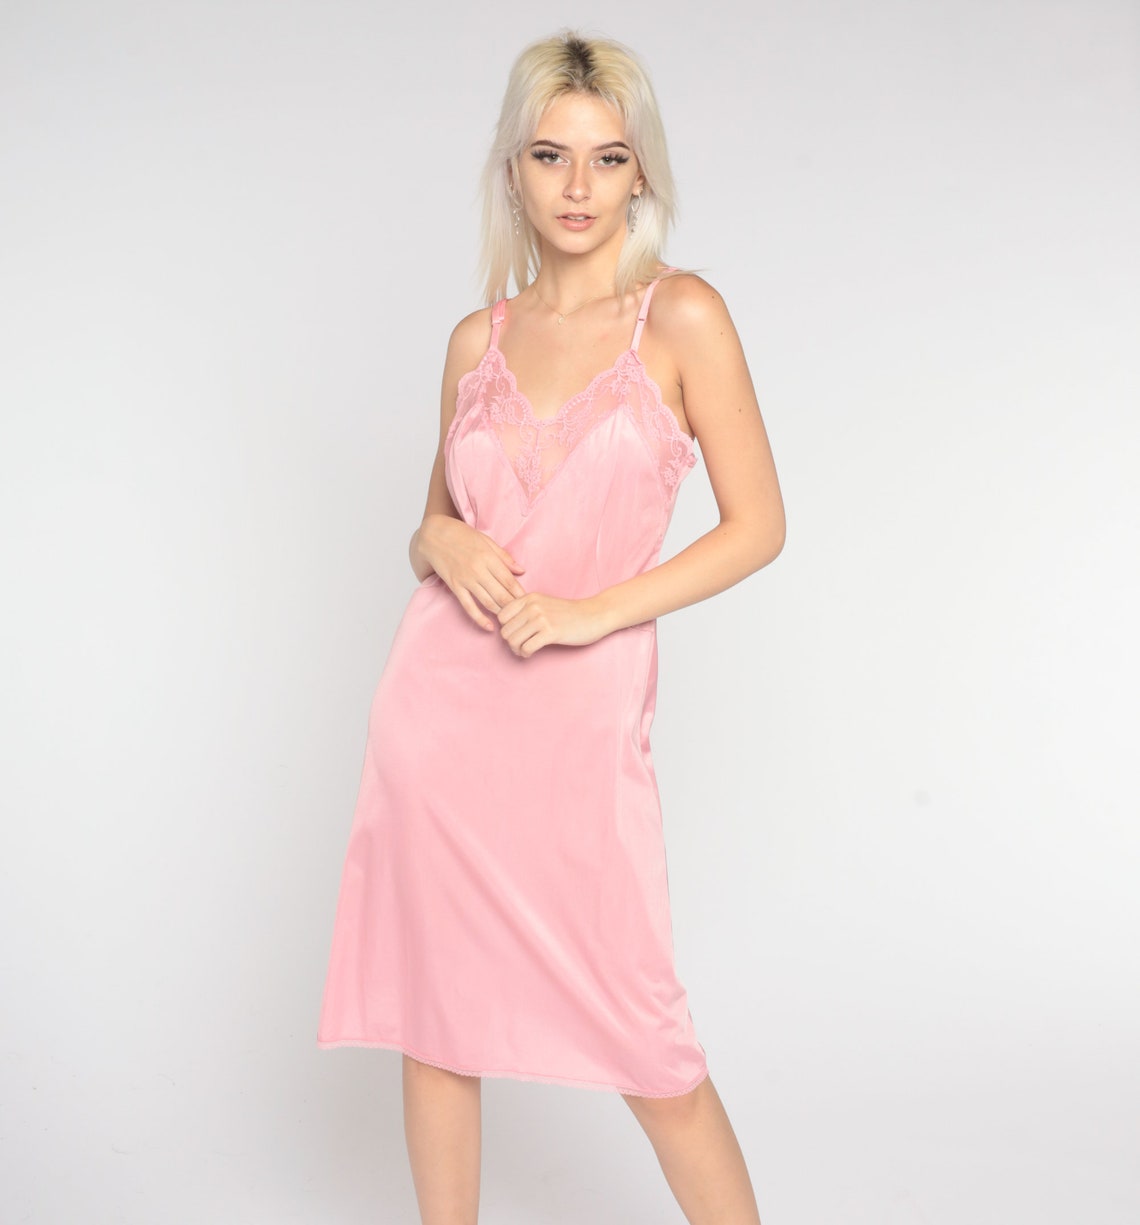 Pink Slip Dress 70s Midi Lingerie Nightgown Dress Nylon - Etsy